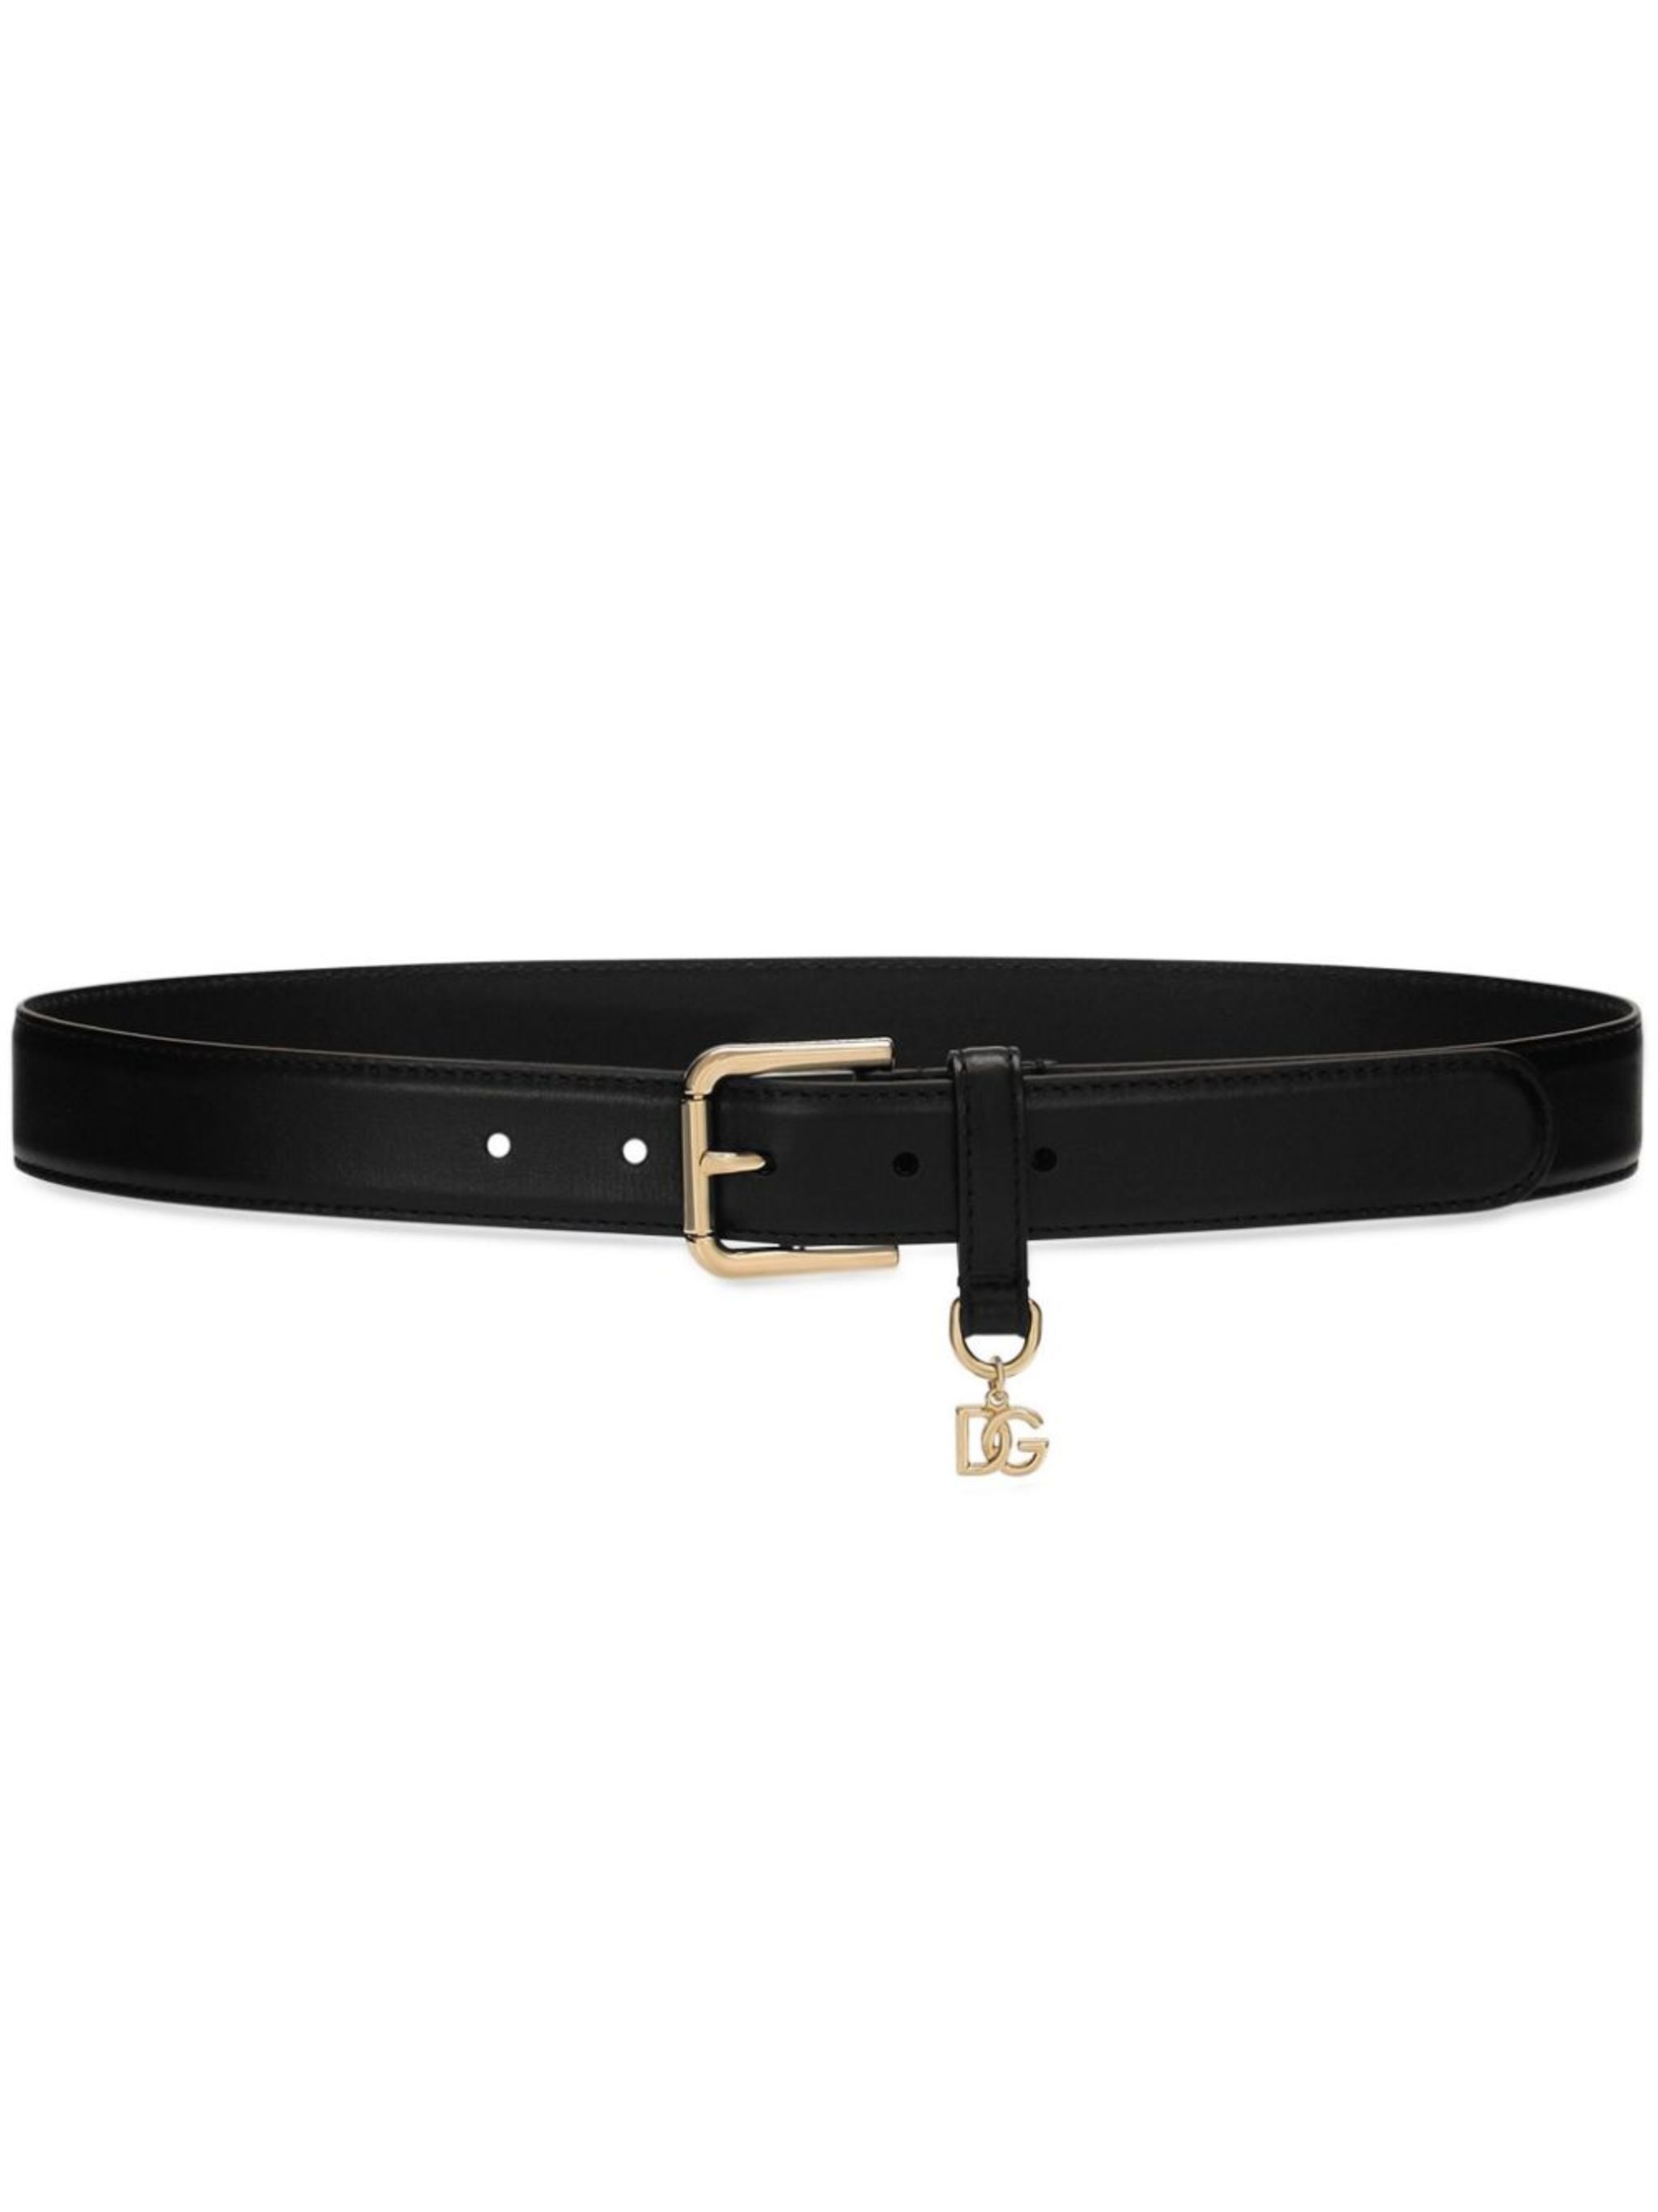 DG-charm leather belt - 1